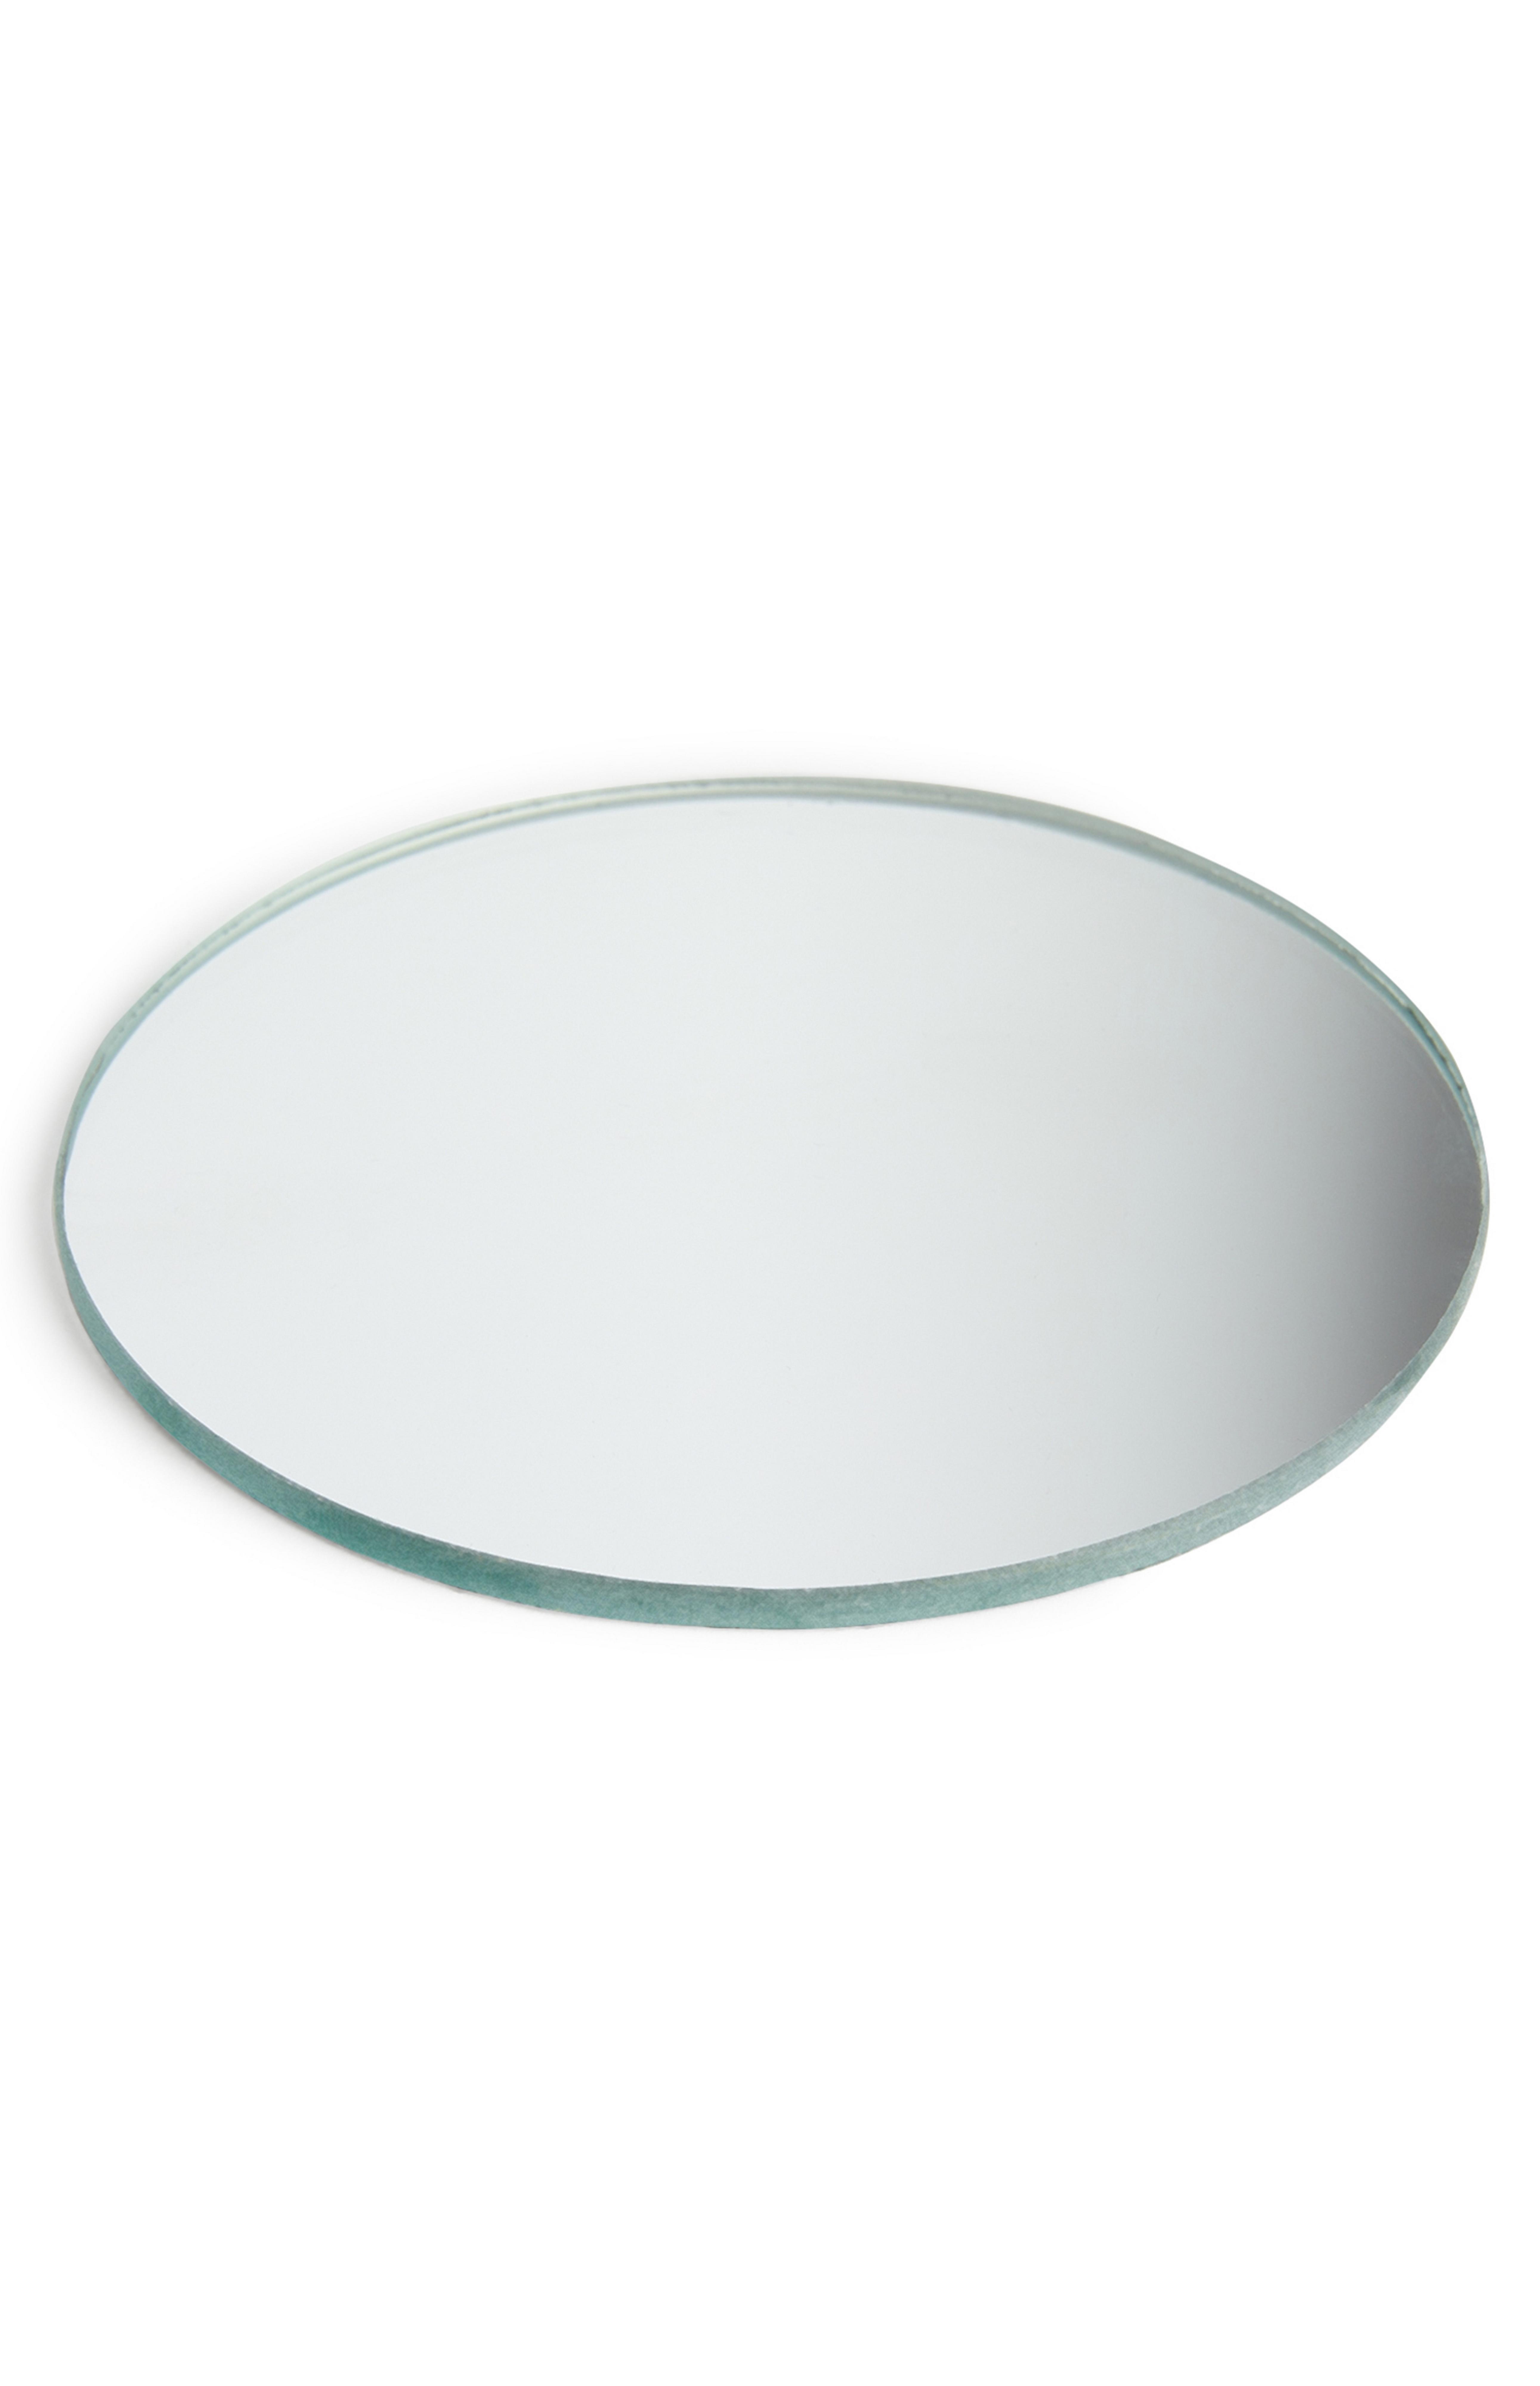 Kleine ronde decoratieve spiegel | Woondecoratie & -accessoires | Interieuraccessoires | Woonartikelen | Alle | Primark